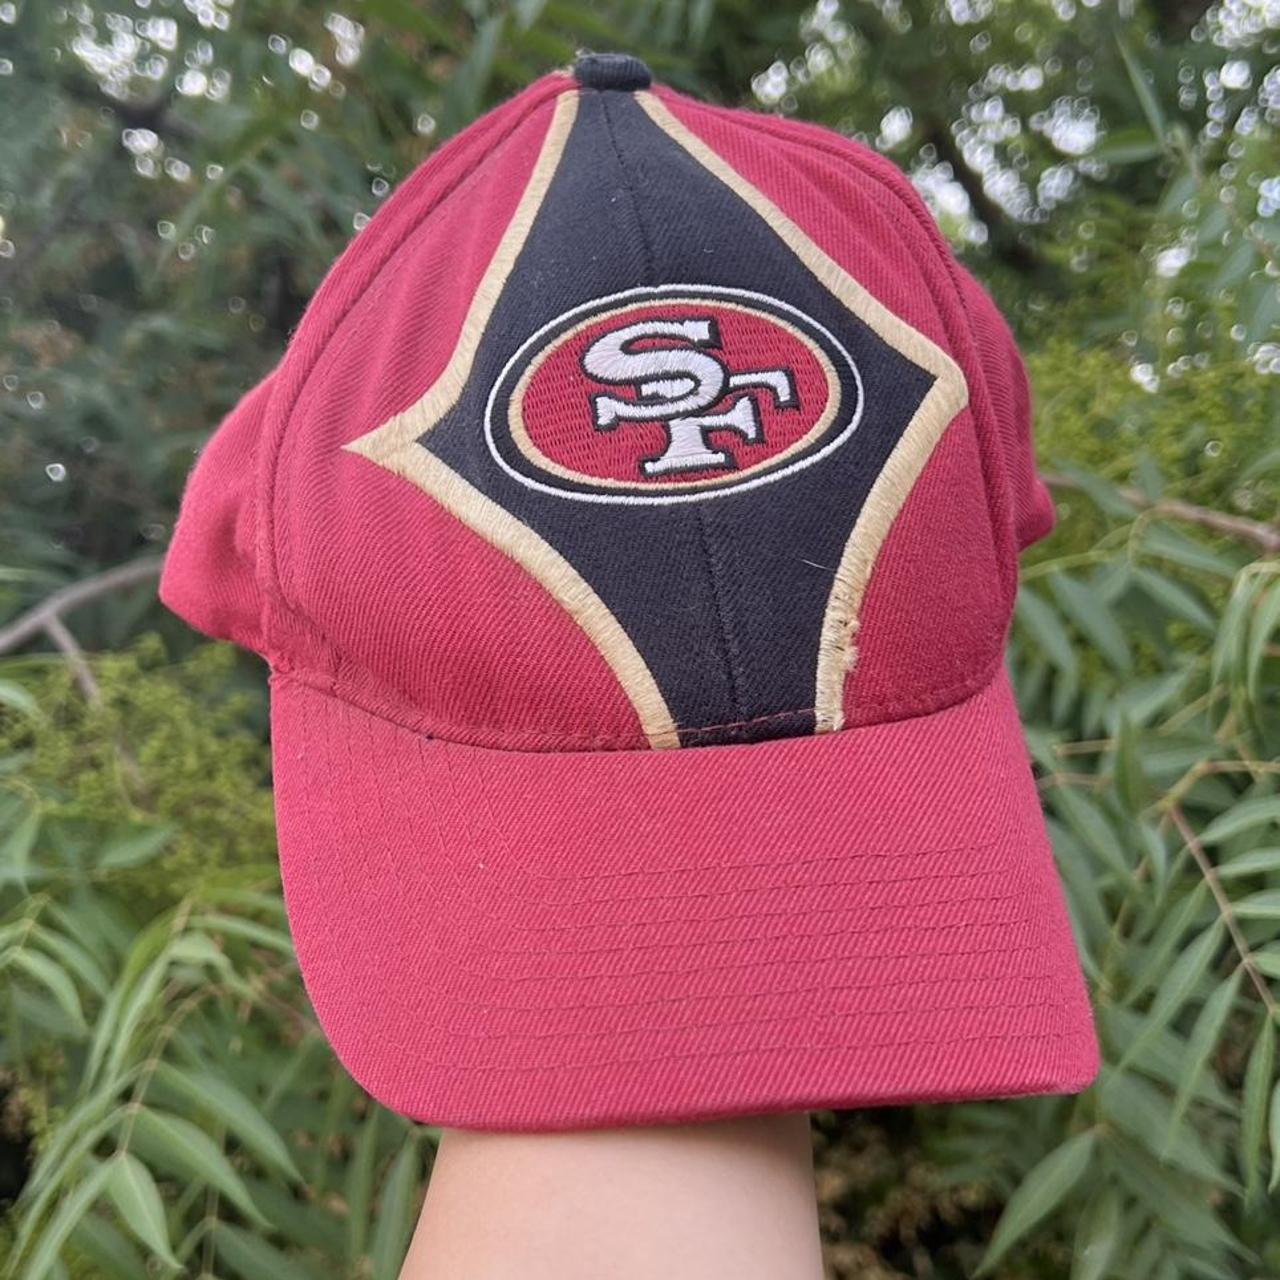 Vintage Starter Sf 49ers Hat from the 90s Good... - Depop